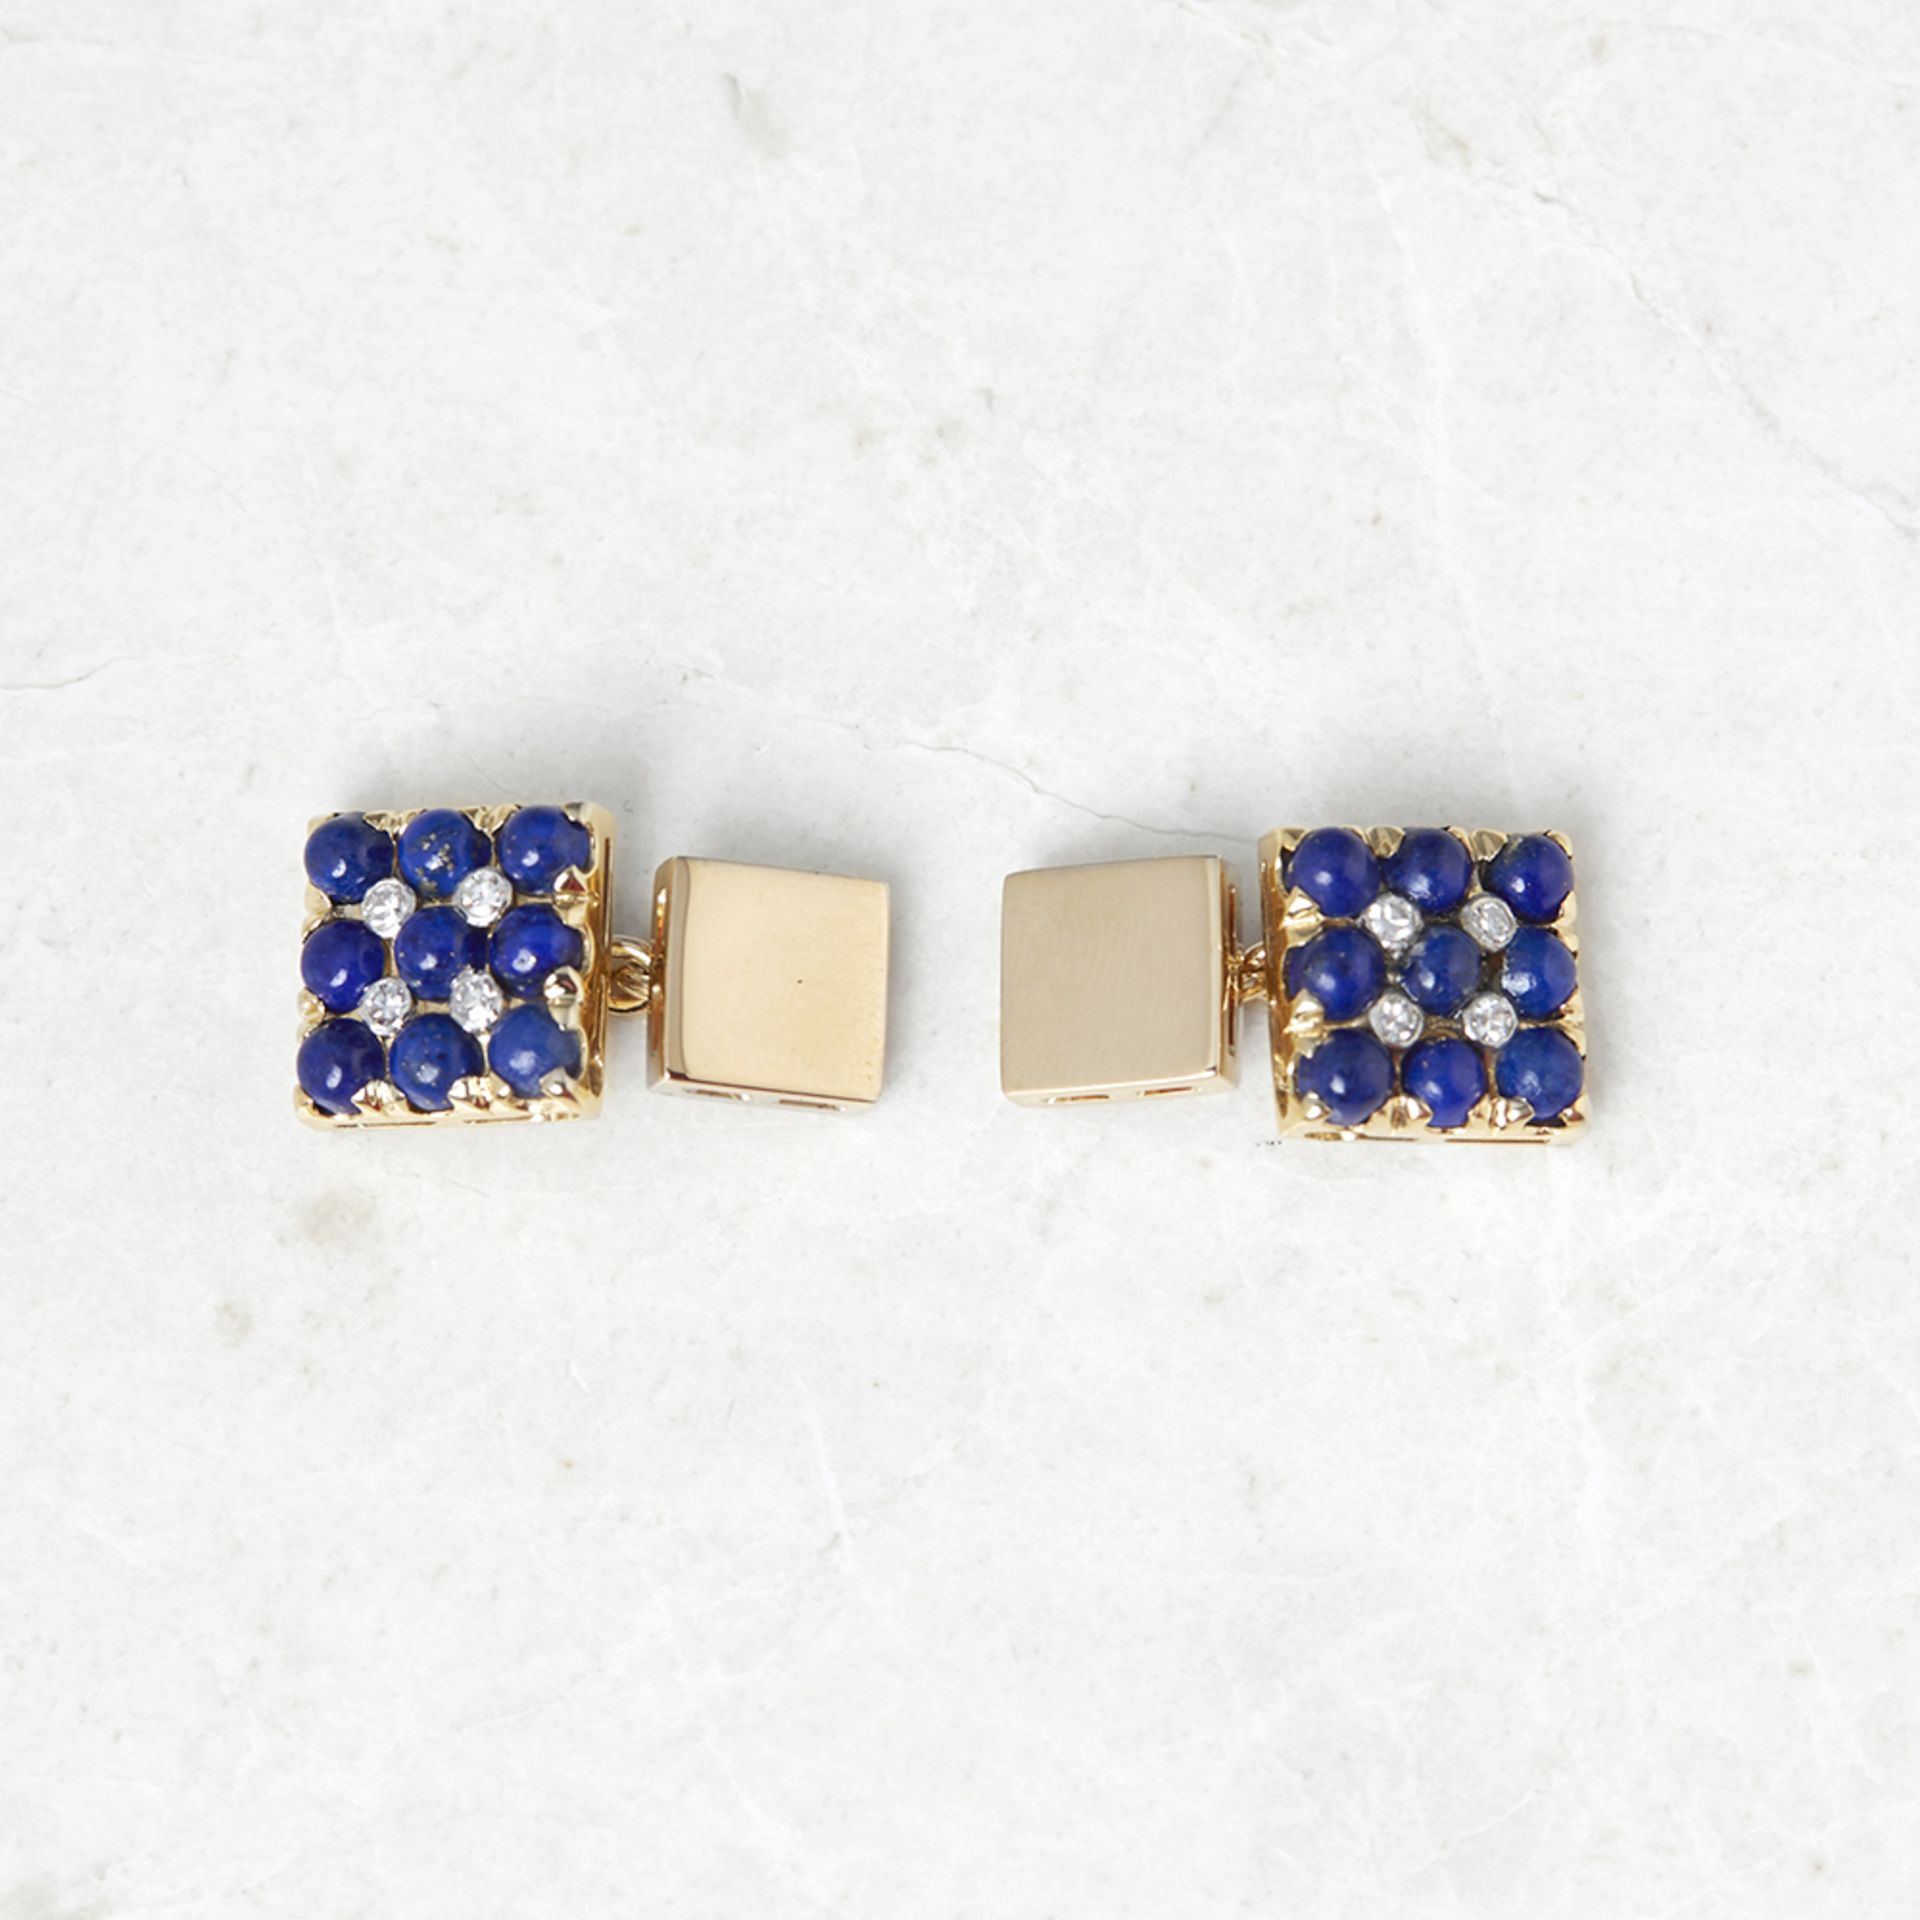 Van Cleef & Arpels 18k Yellow Gold Lapis Lazuli & 0.20ct Diamond Cufflinks - Image 3 of 5